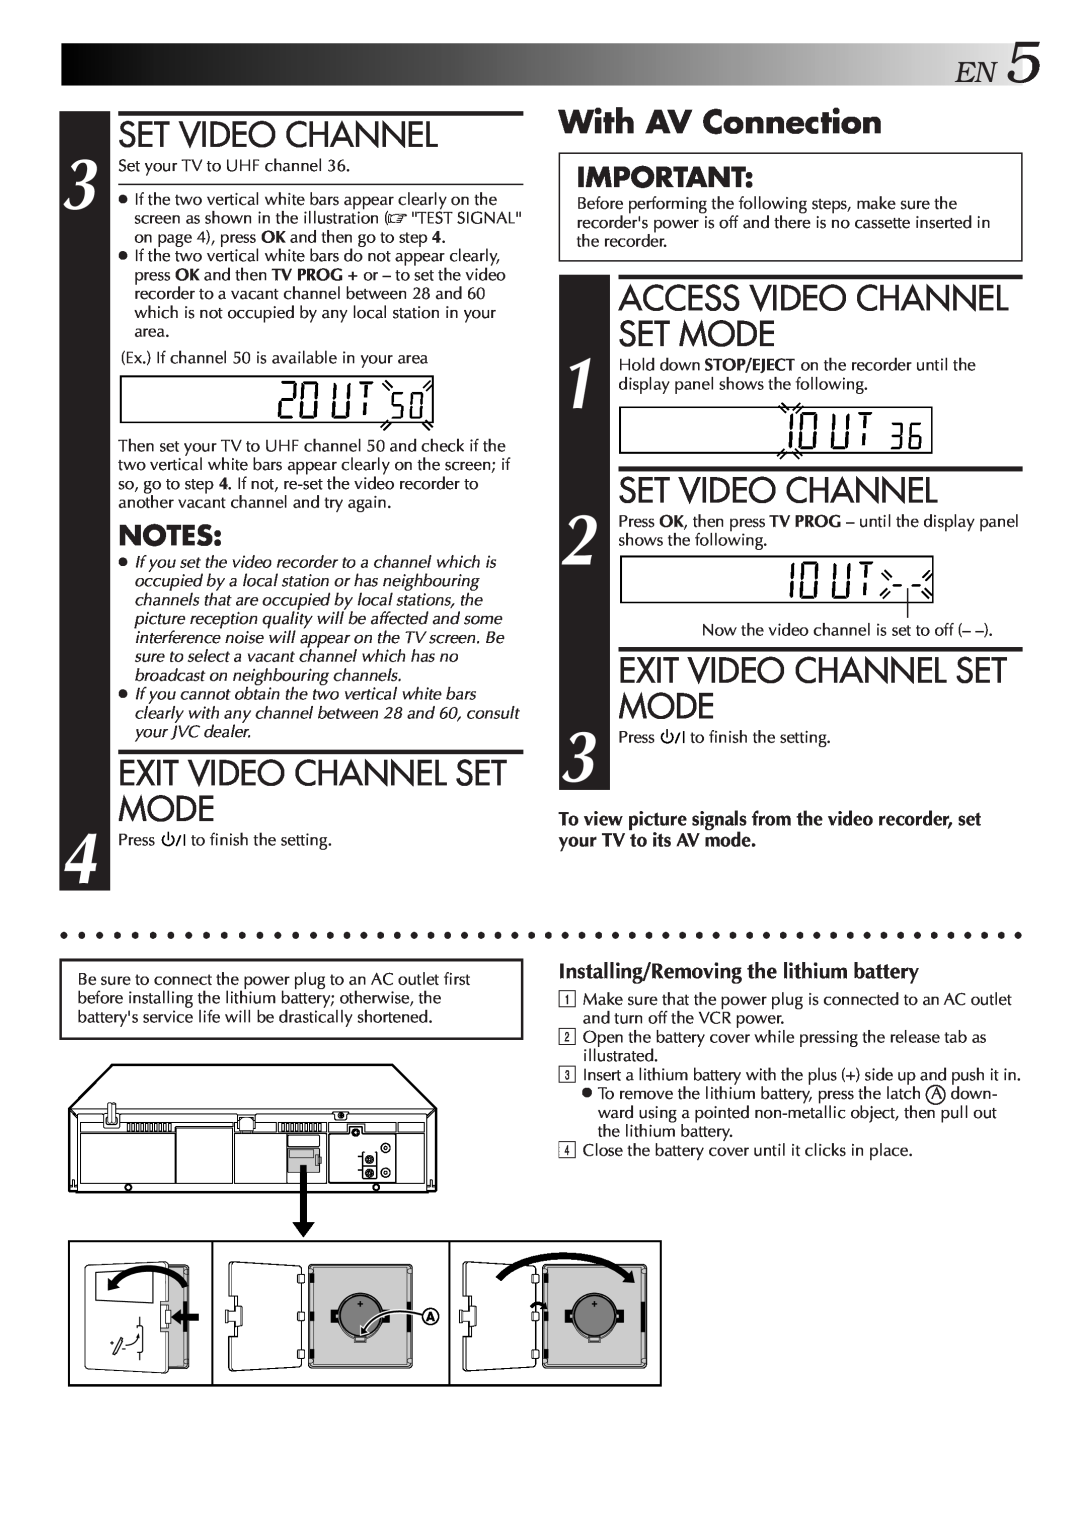 JVC HR-J457MS Set Video Channel, Exit Video Channel Set Mode, With AV Connection, Access Video Channel Set Mode 